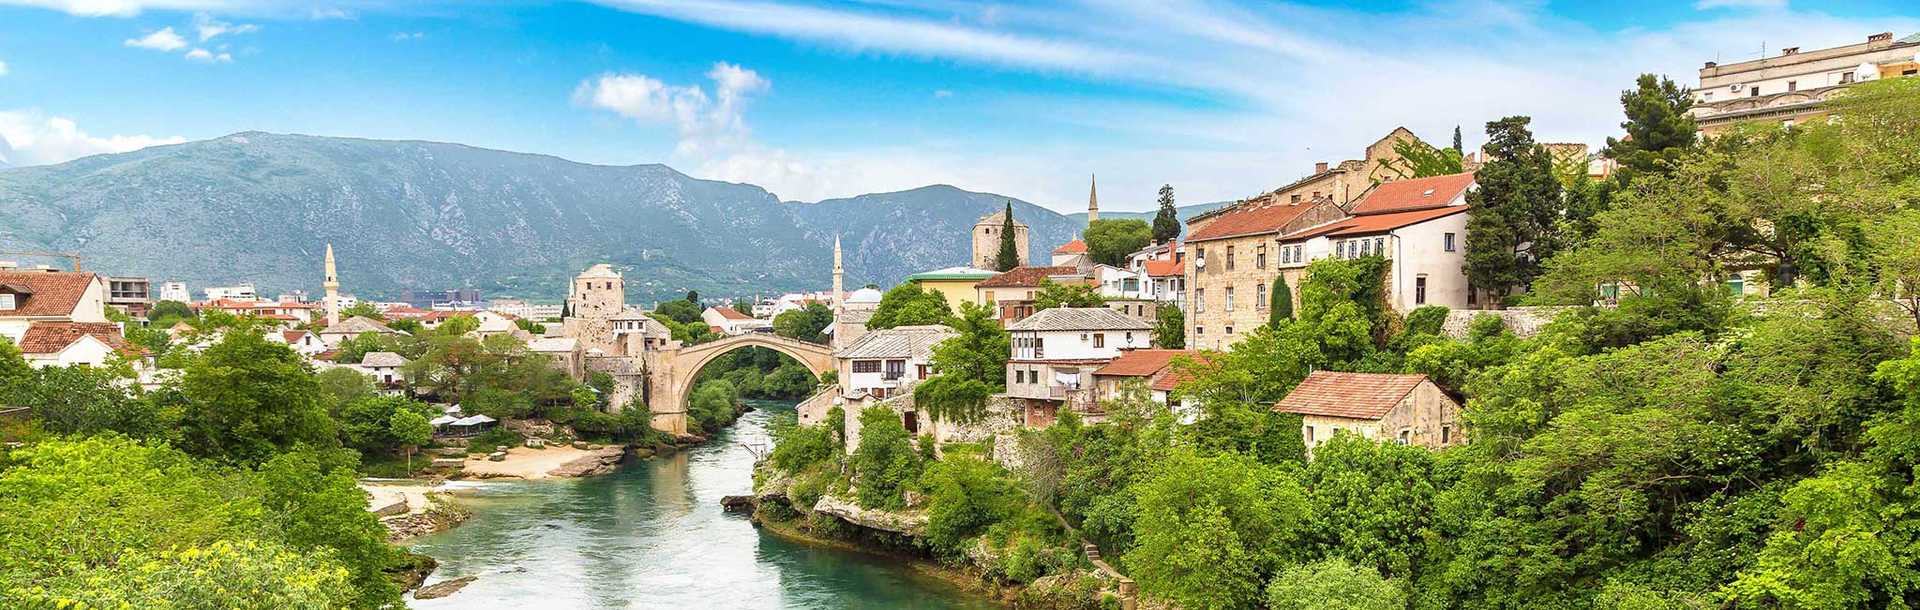 Bosnia Tours - Old bridge in Mostar